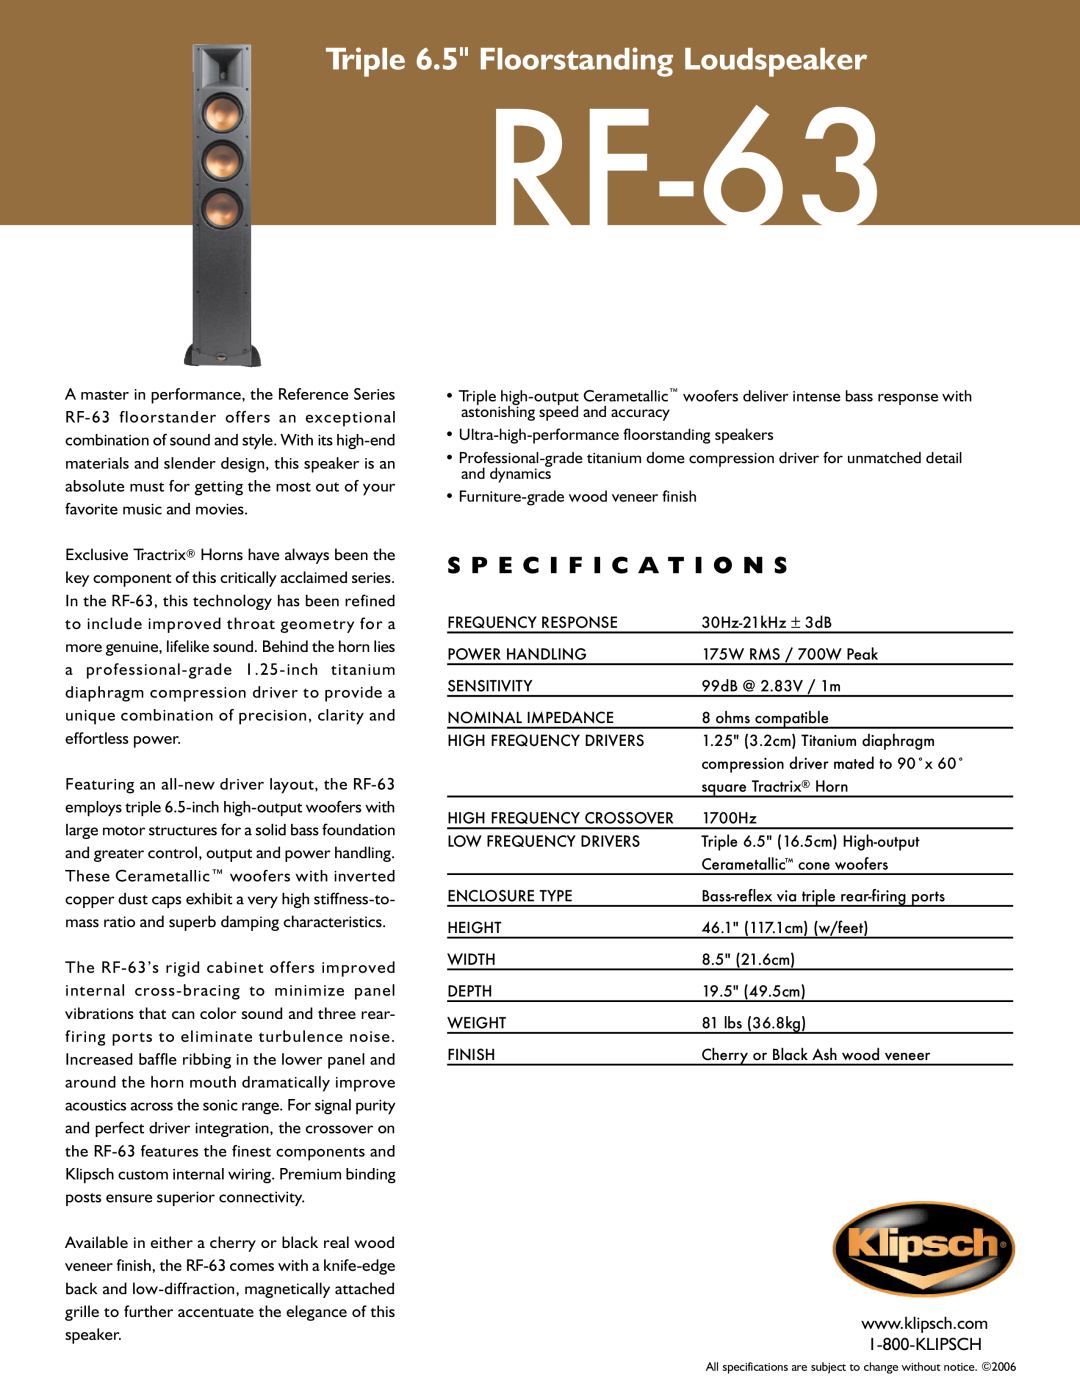 Klipsch RF-63 specifications Triple 6.5 Floorstanding Loudspeaker, S P E C I F I C A T I O N S 